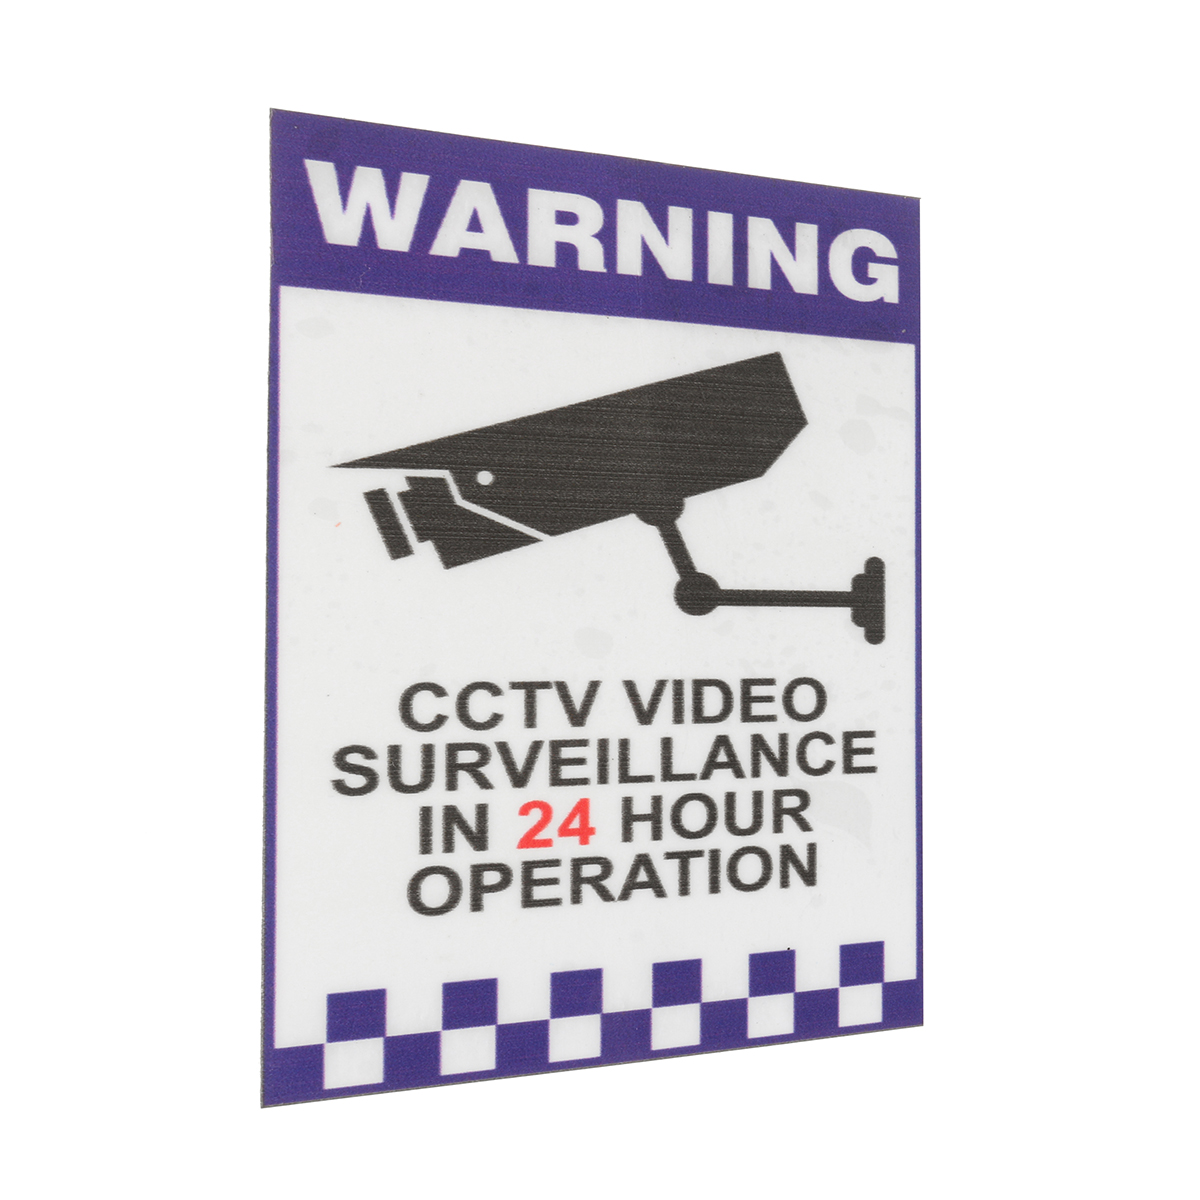 Warning-CCTV-Security-Surveillance-Camera-Decal-Sticker-Sign-66mmx100mm-Internal-1152562